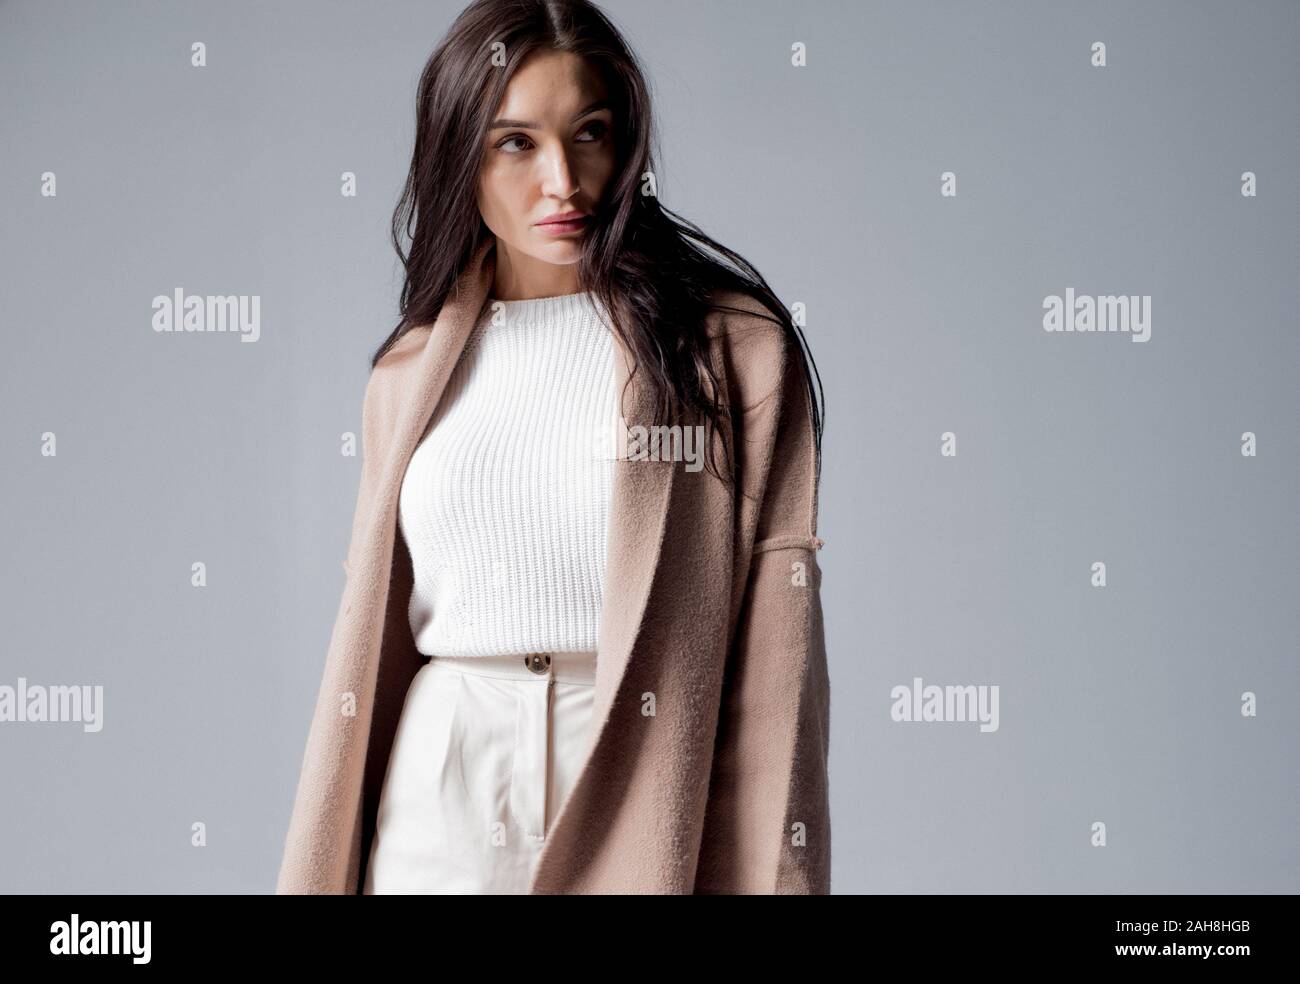 Klara Korobova models fashion for Winter 2020 in studio fashion shoot. Stock Photo